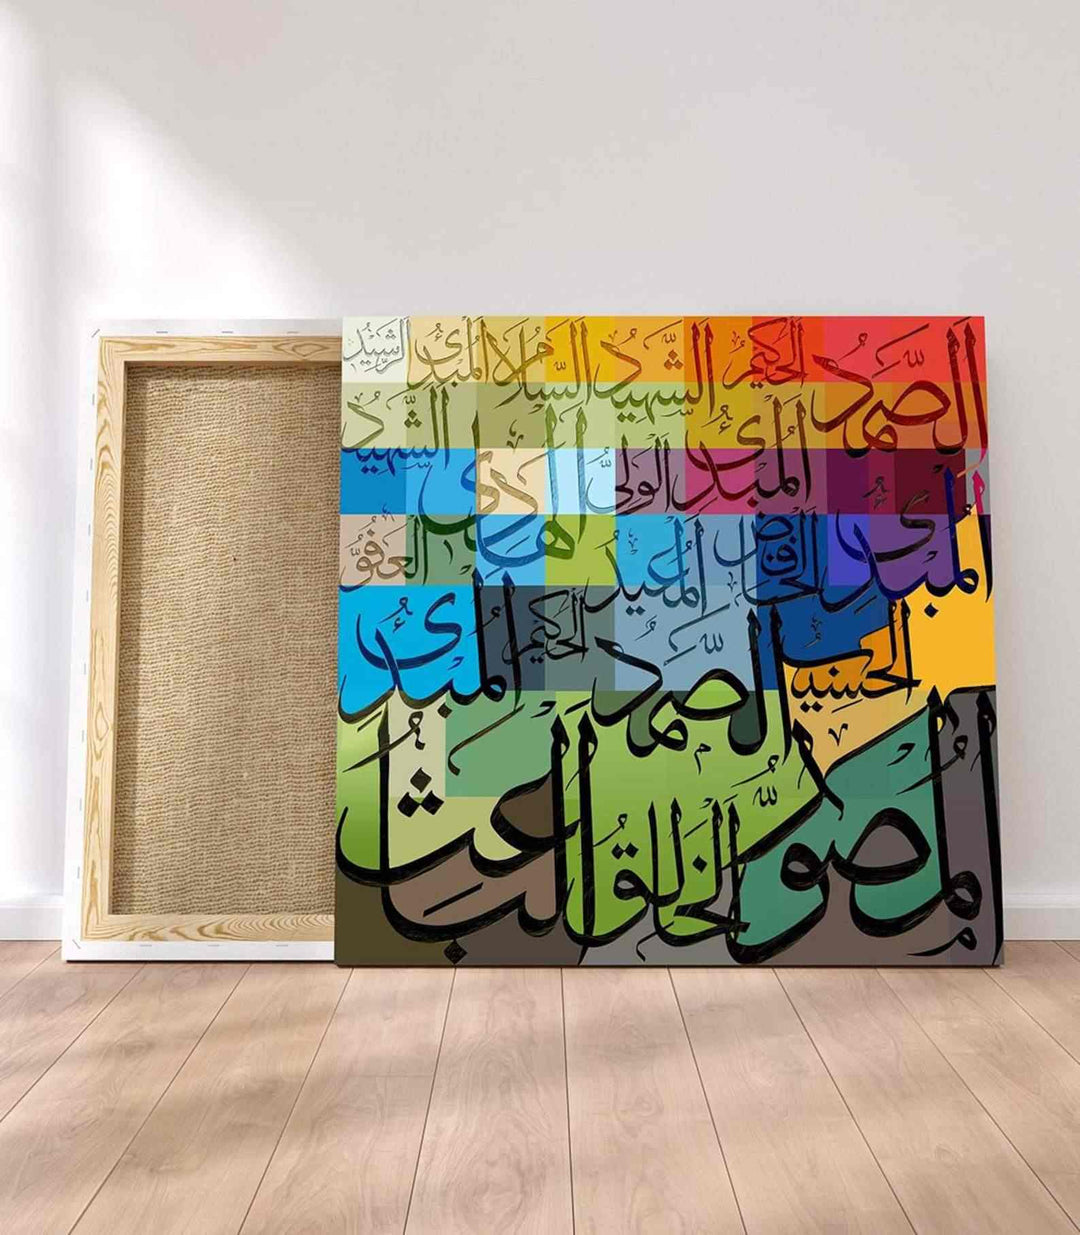 Al Asmaul Husna v2 Calligraphy Canvas Print Islamic Wall Art - Islamic Wall Art Store